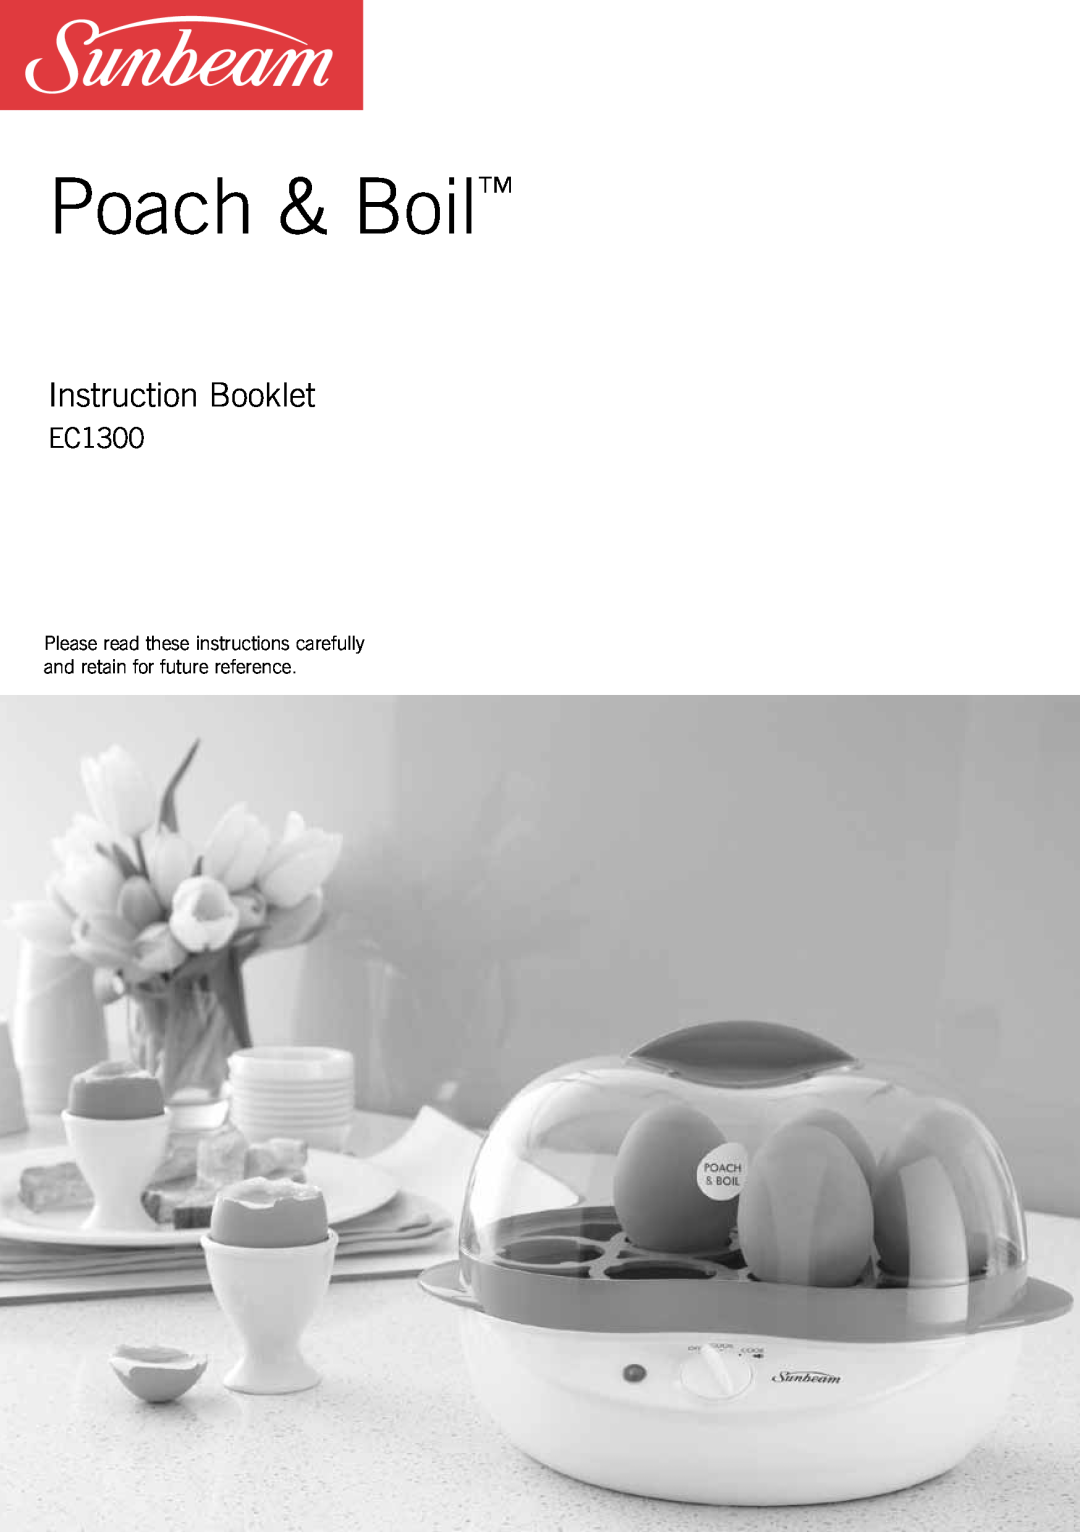 Sunbeam EC1300 manual Poach & Boil, Instruction Booklet 